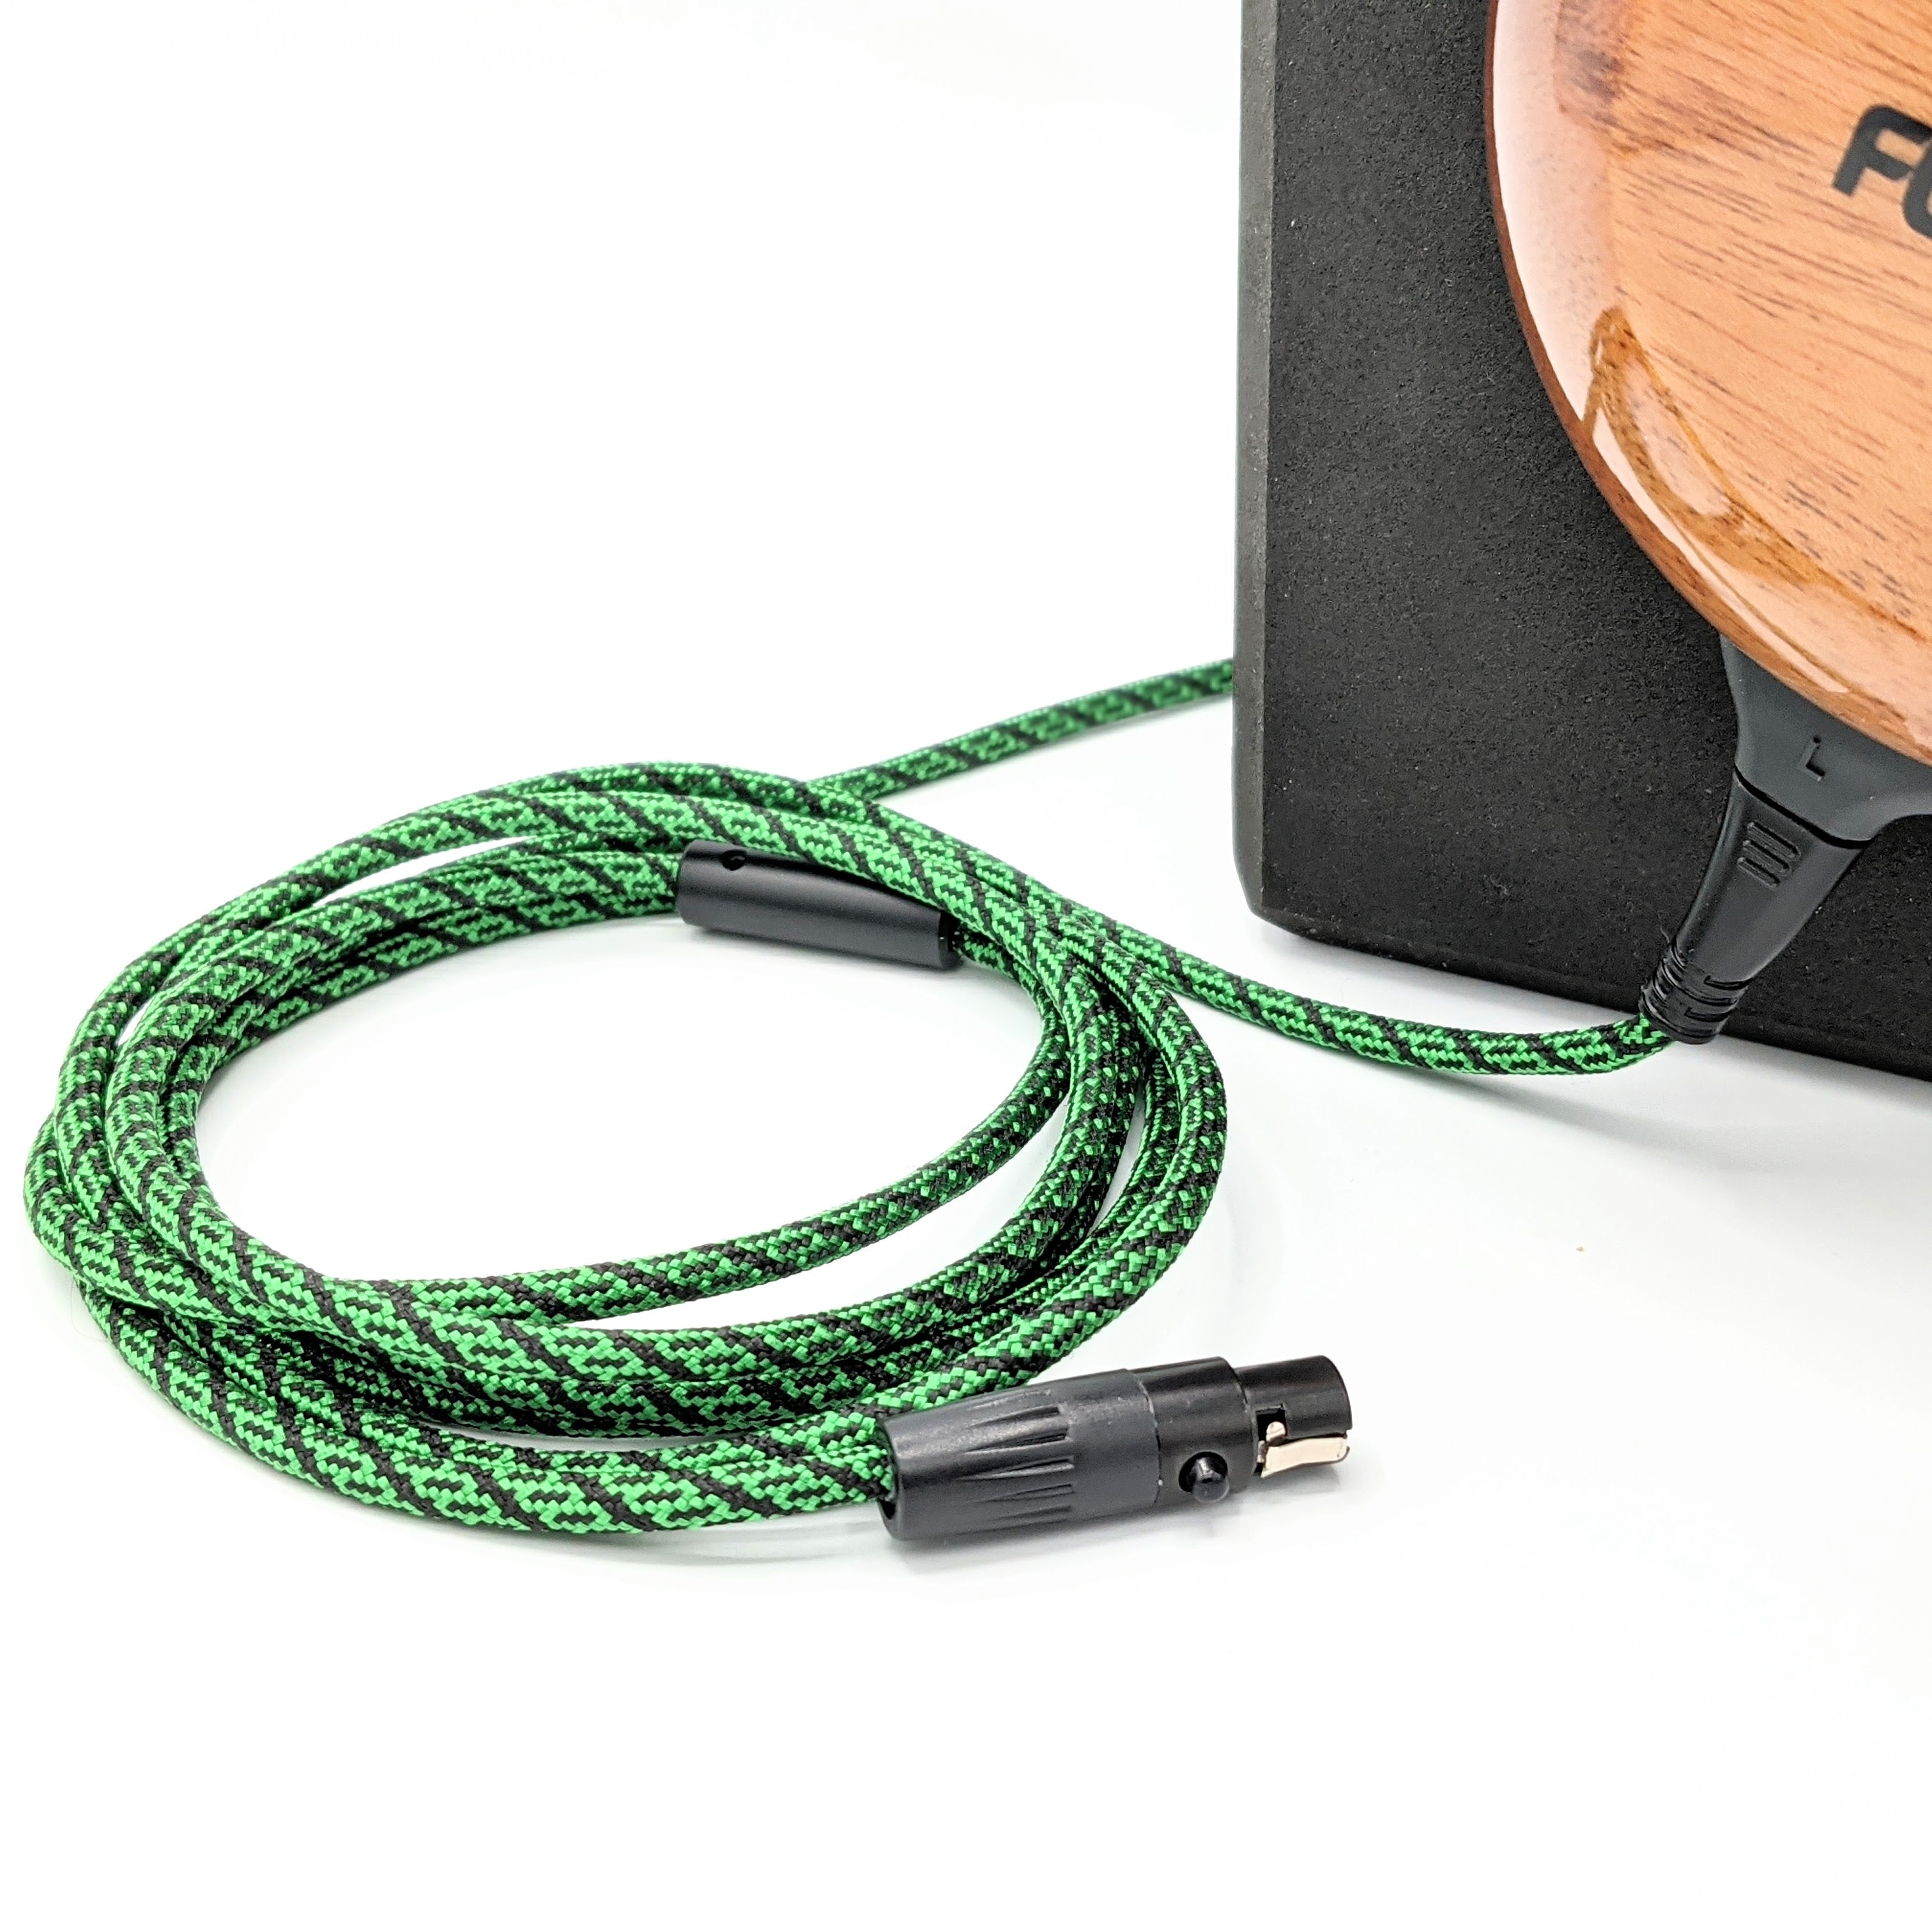 HC-11: Dual Fostex 2-Pin Balanced Headphone Cable